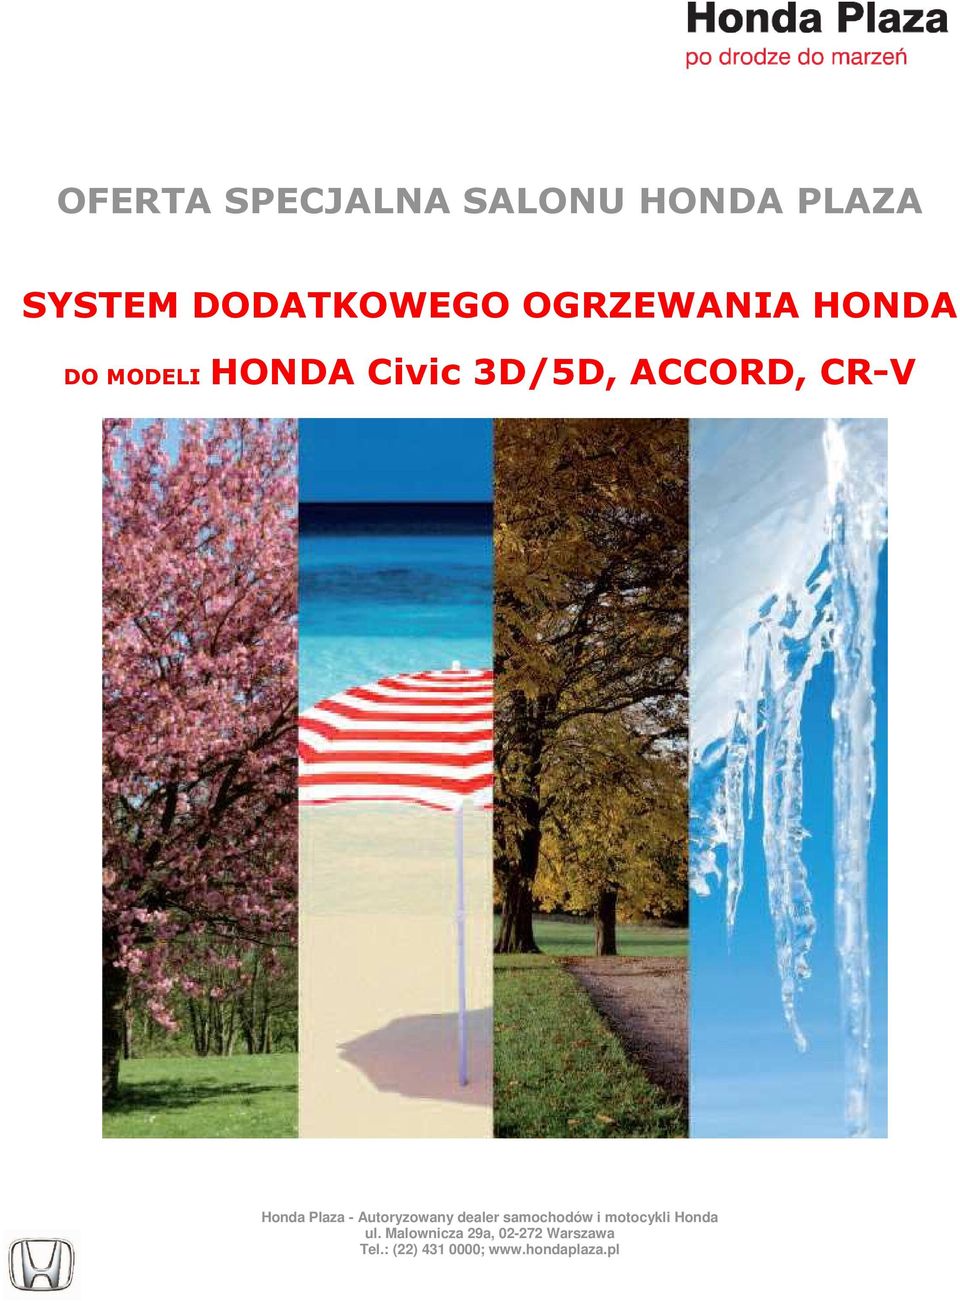 Honda Plaza - Autoryzowany dealer samochodów i motocykli Honda